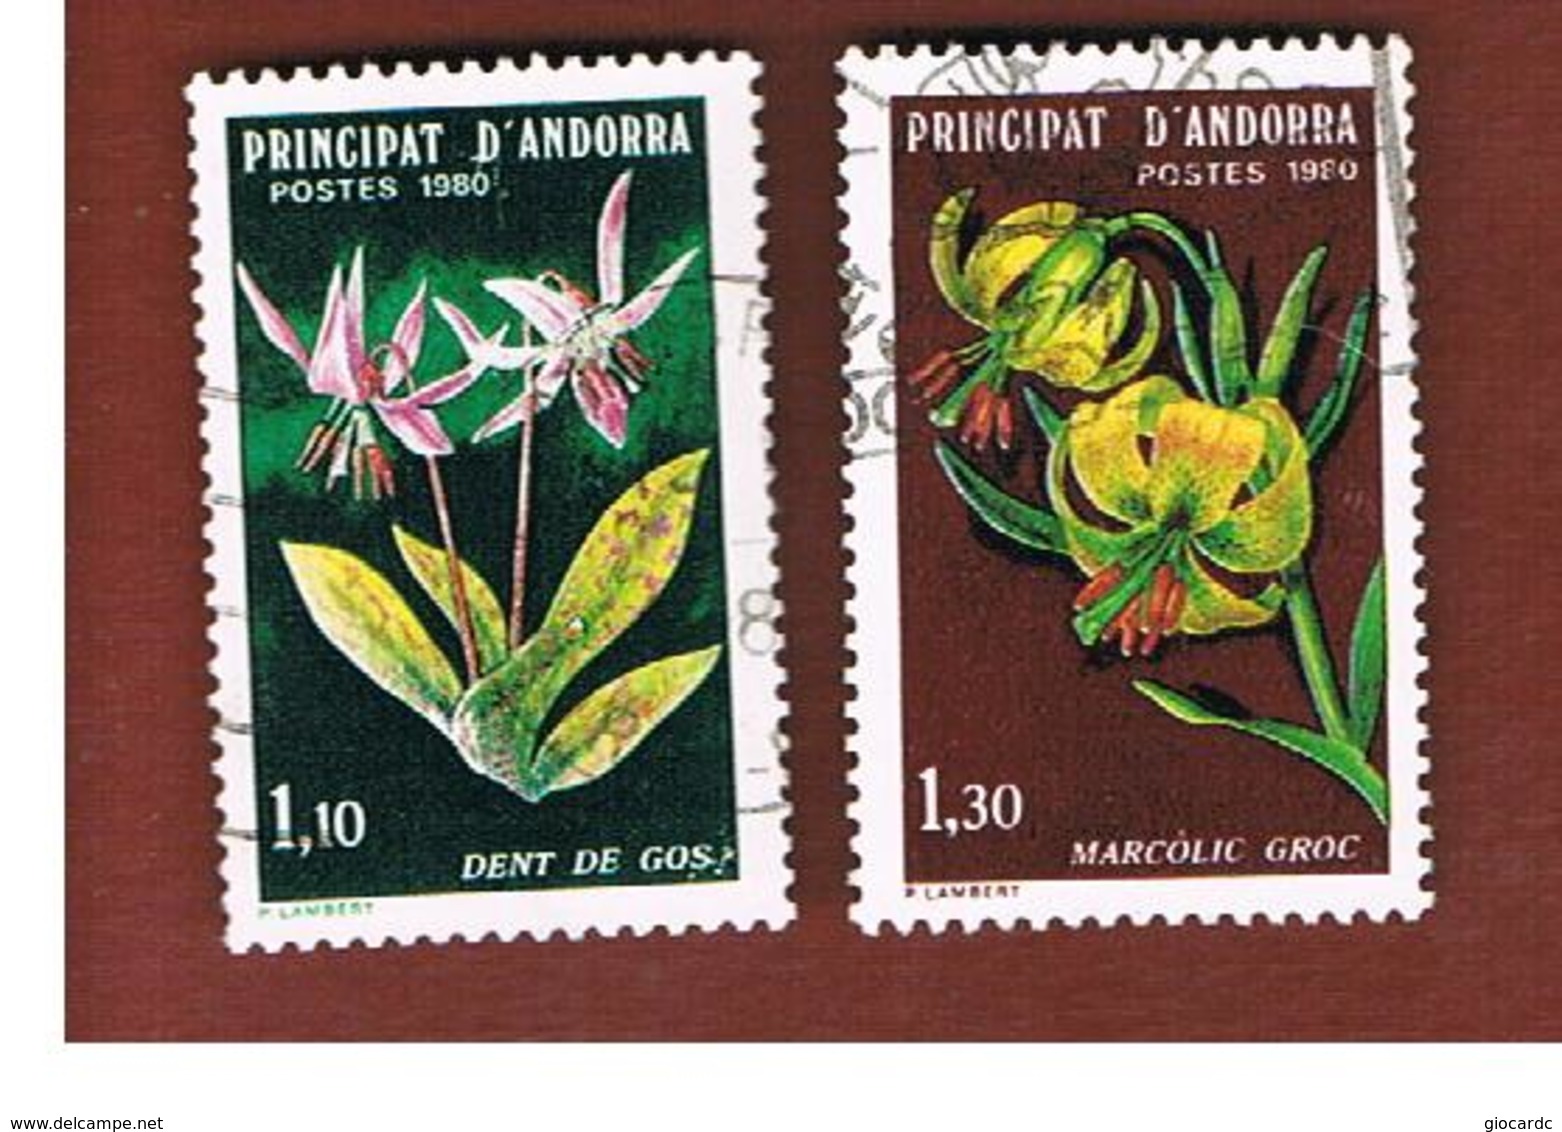 ANDORRA FRANCESE (FRENCH ANDORRA)  -  SG F306.307 - 1980   FLOWERS  (COMPLET SET OF 2)  -     USED - Oblitérés